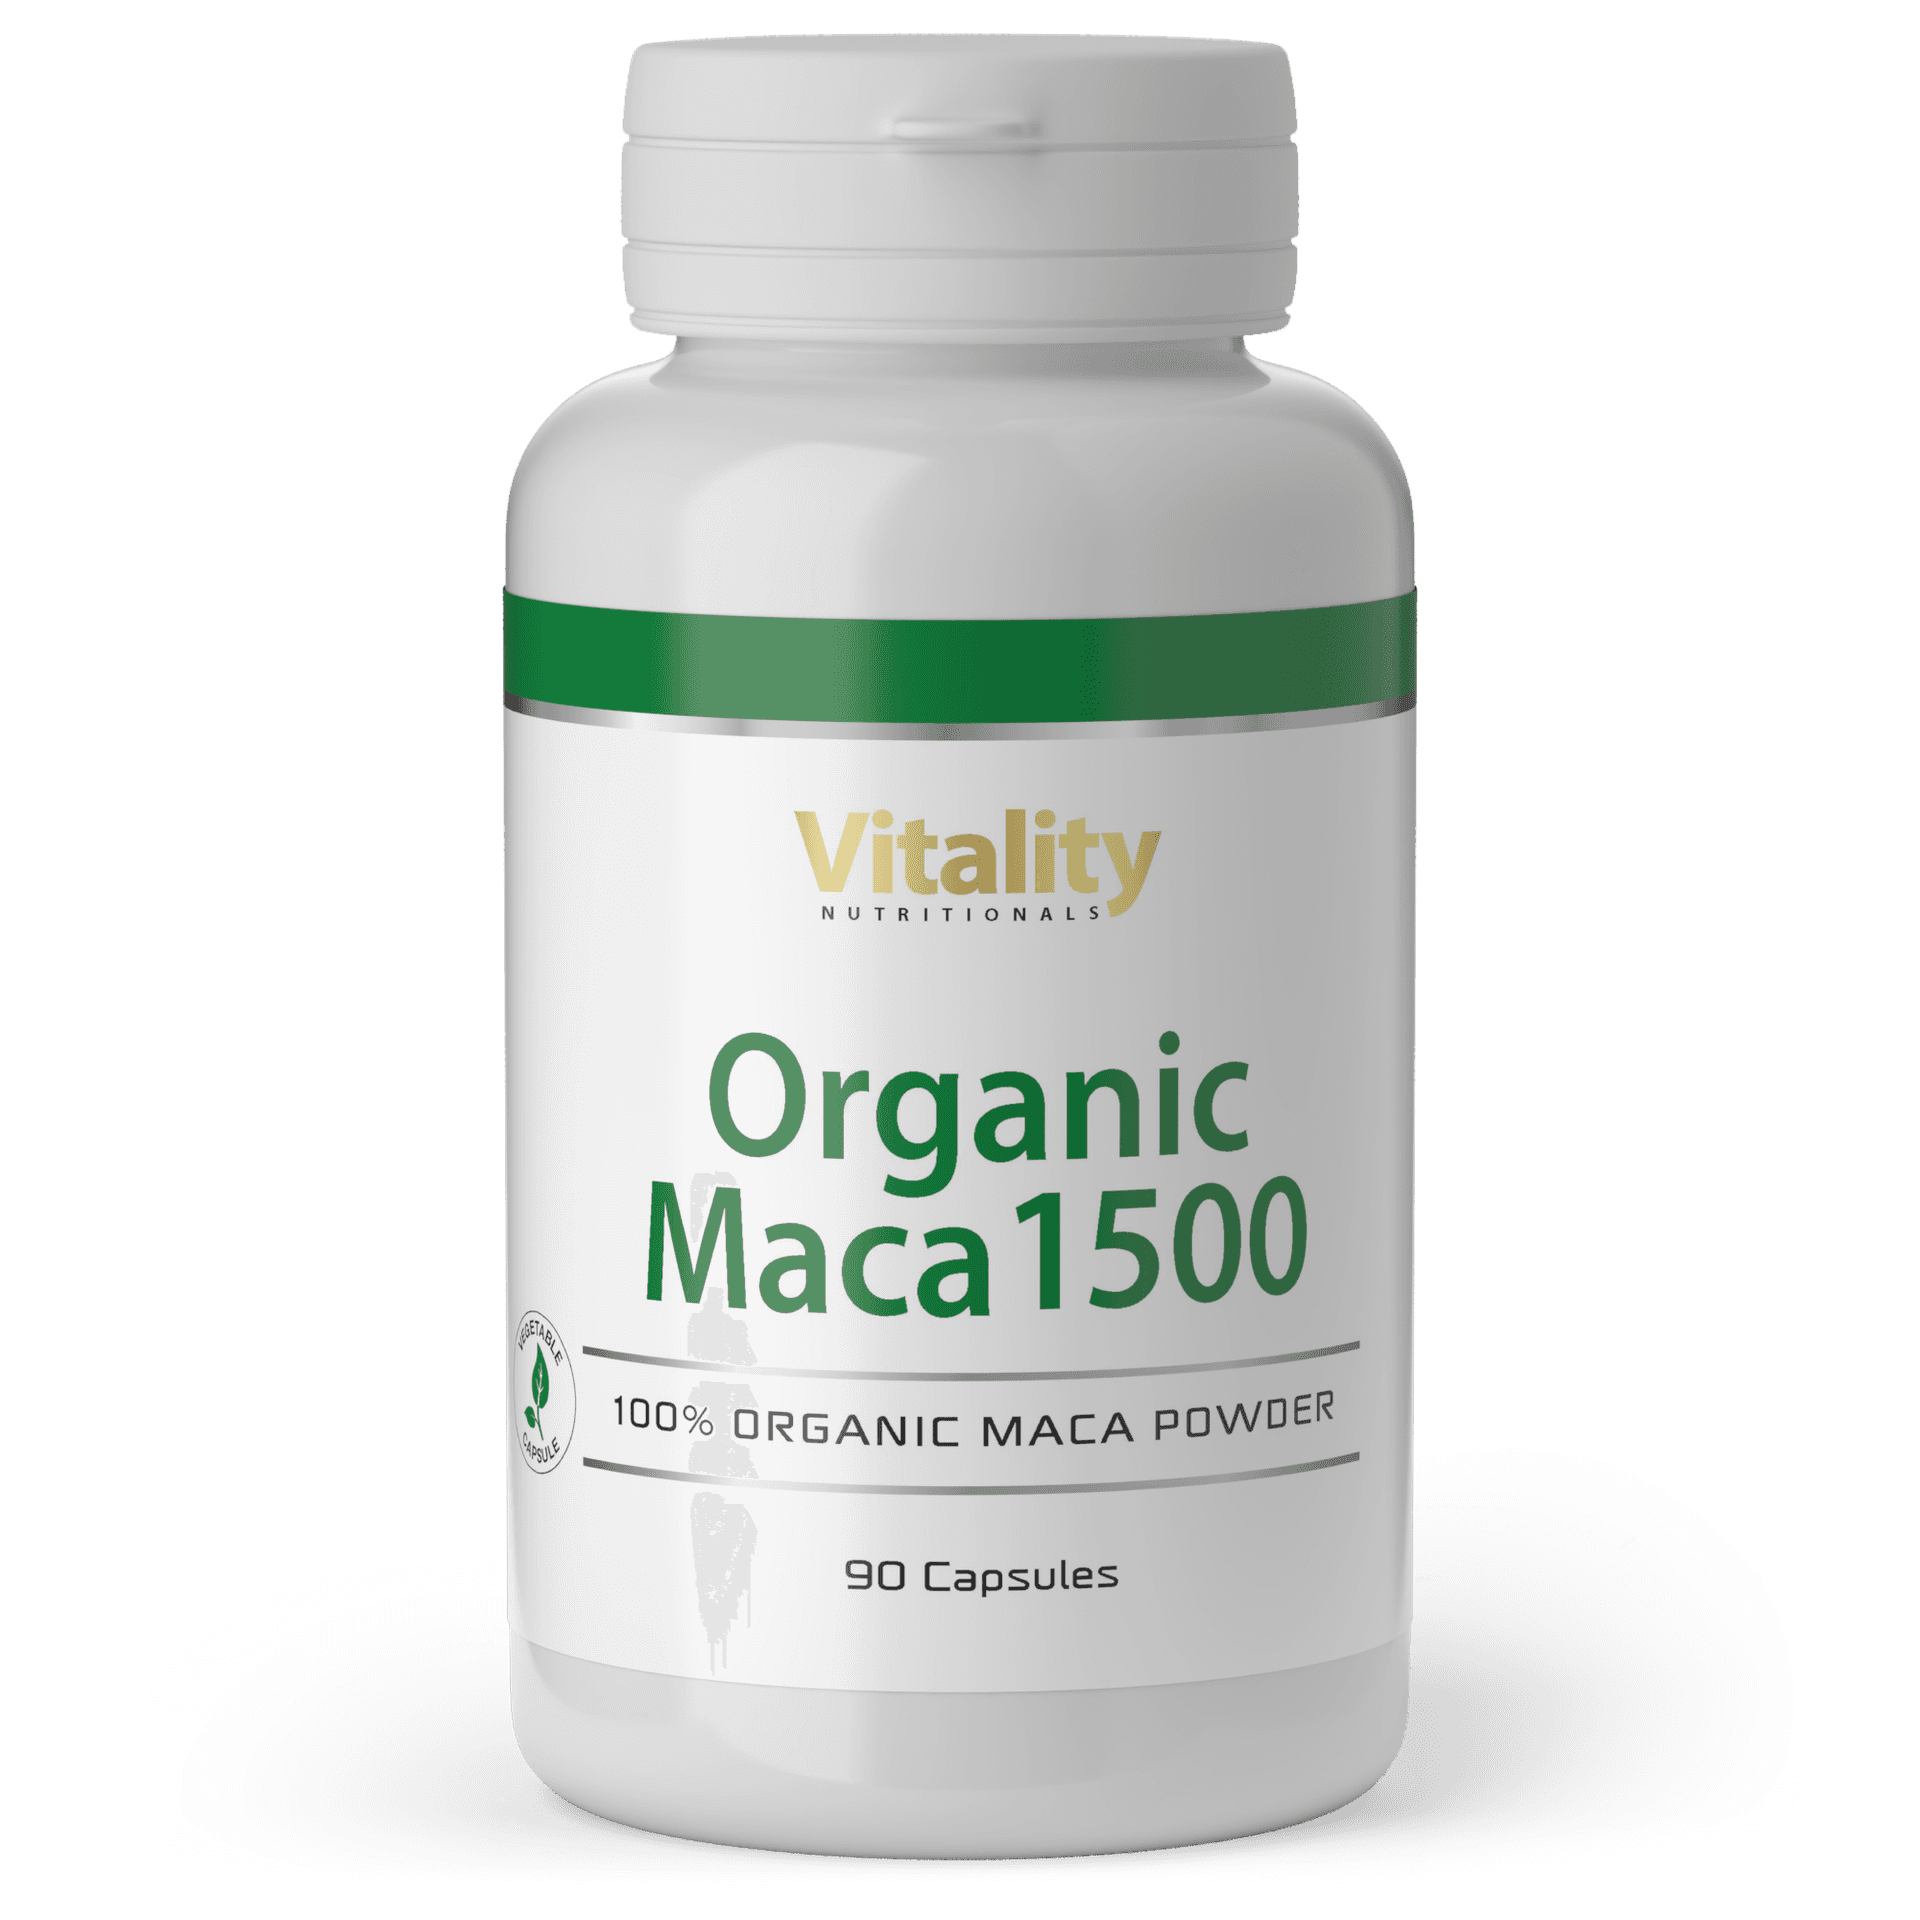 Organic Maca 1500